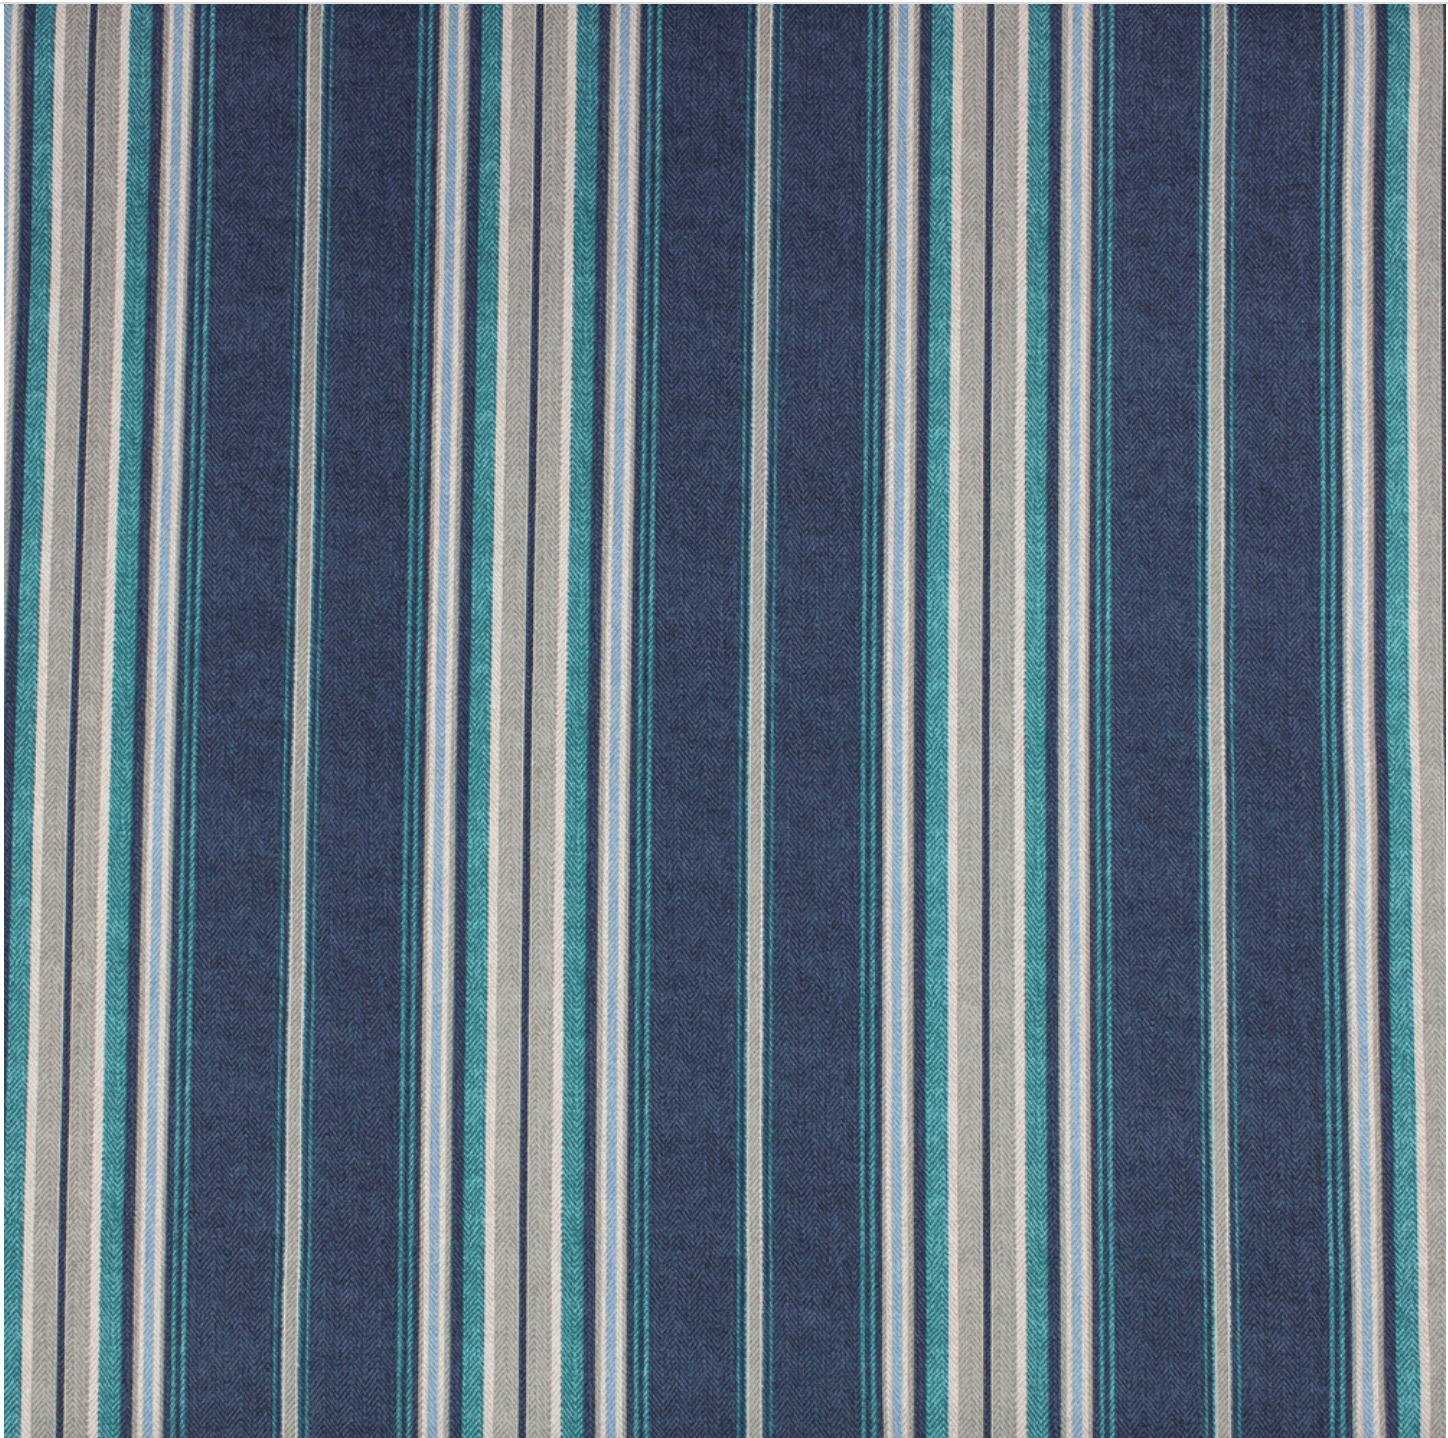 Blue stripe outdoor fabric.